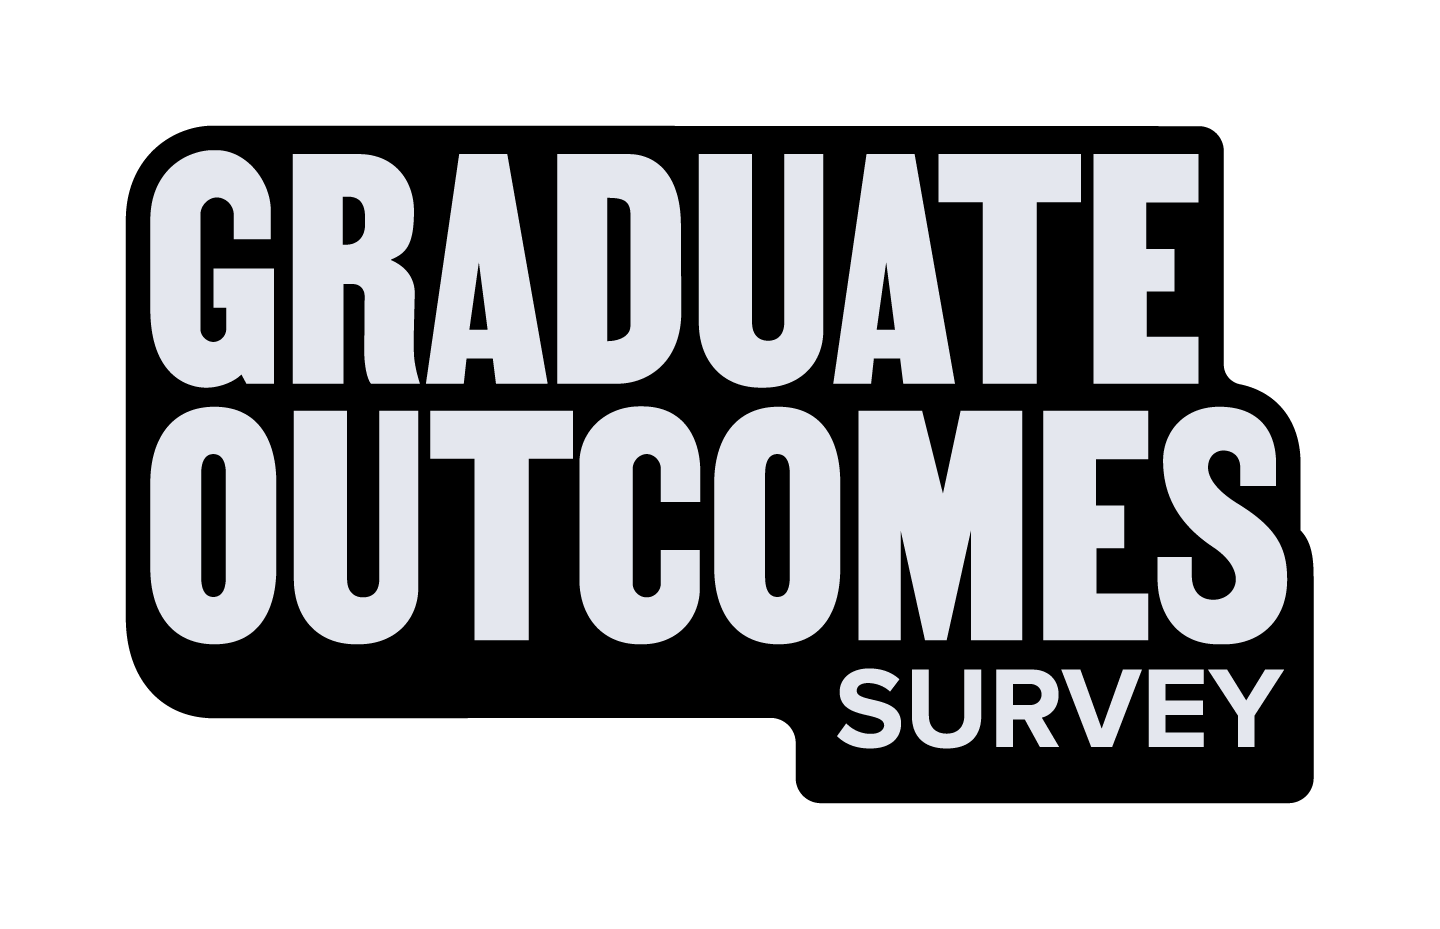 Graduate Outcomes Survey